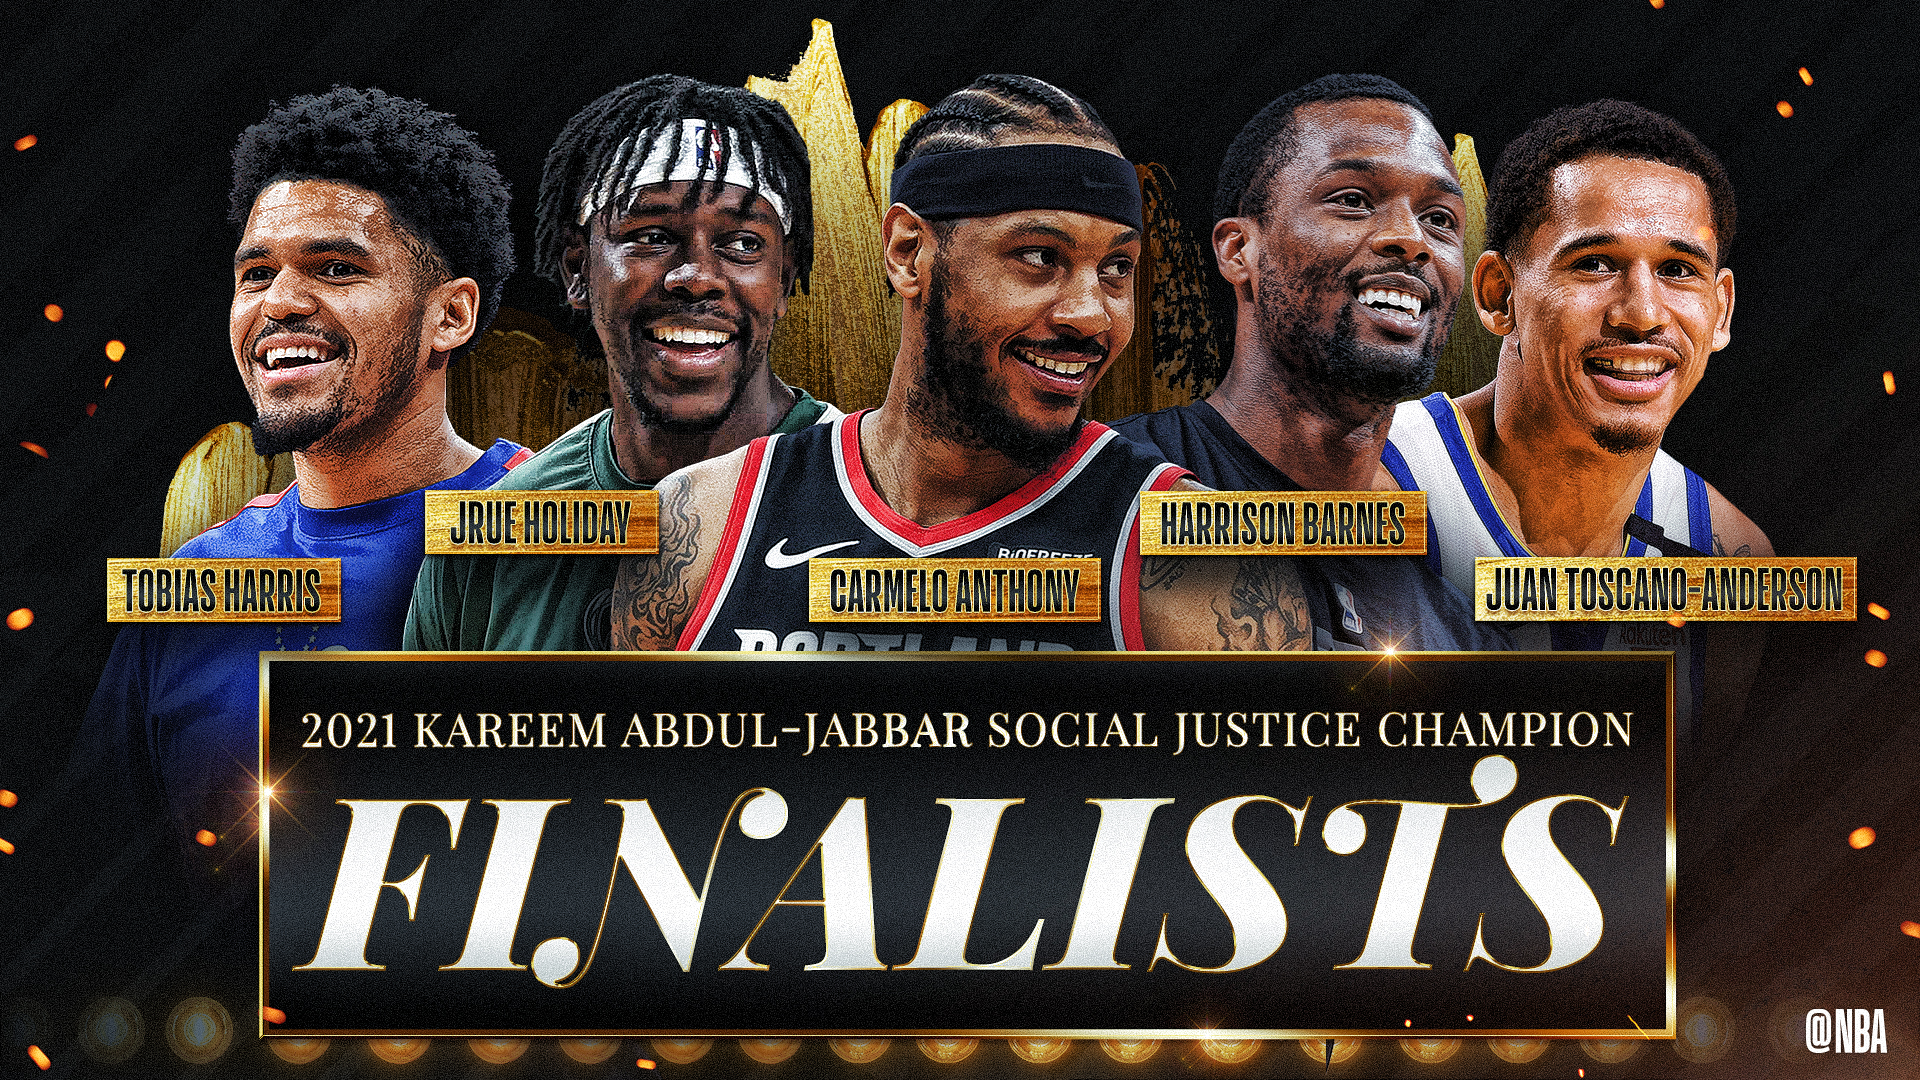 Finalists announced for the inaugural Kareem Abdul-Jabbar Social Justice Champion Award